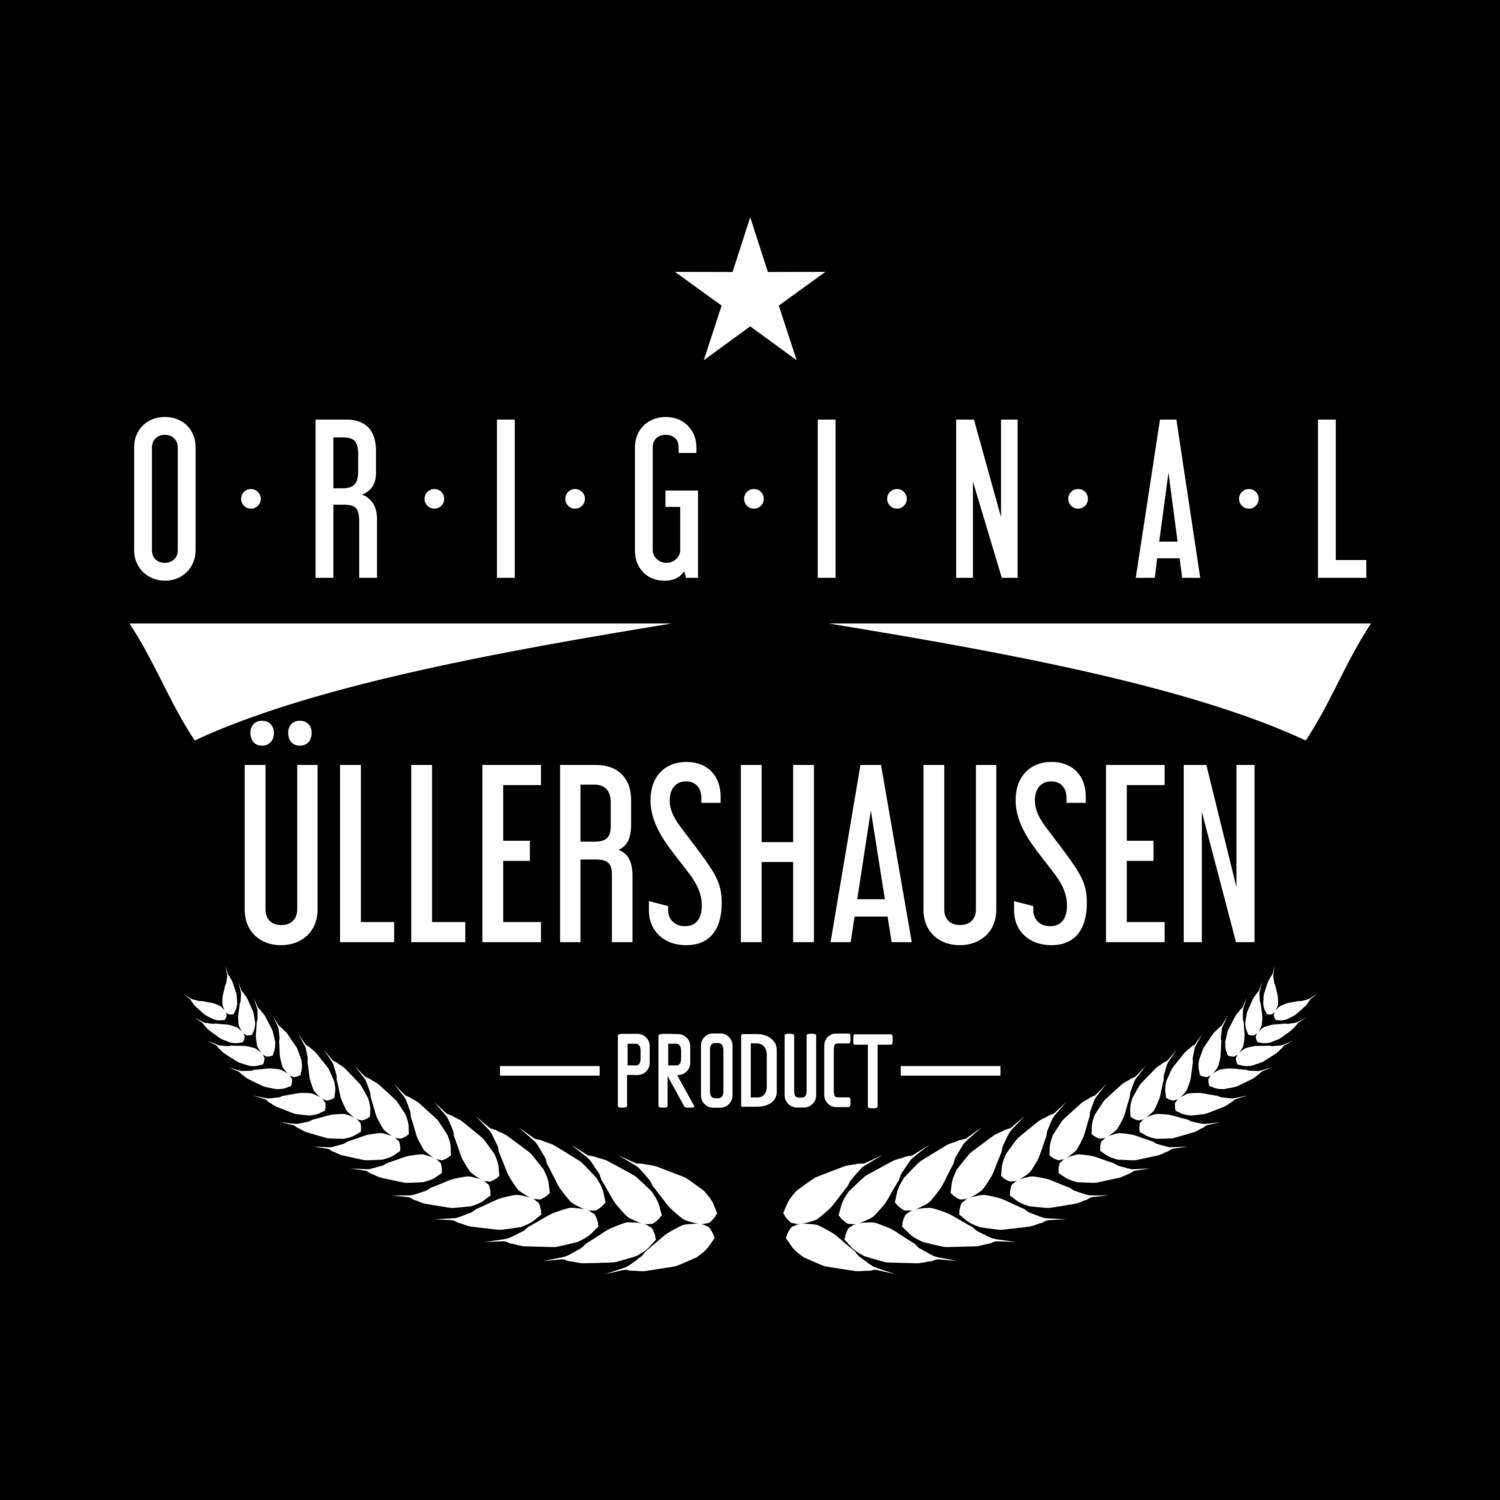 Üllershausen T-Shirt »Original Product«